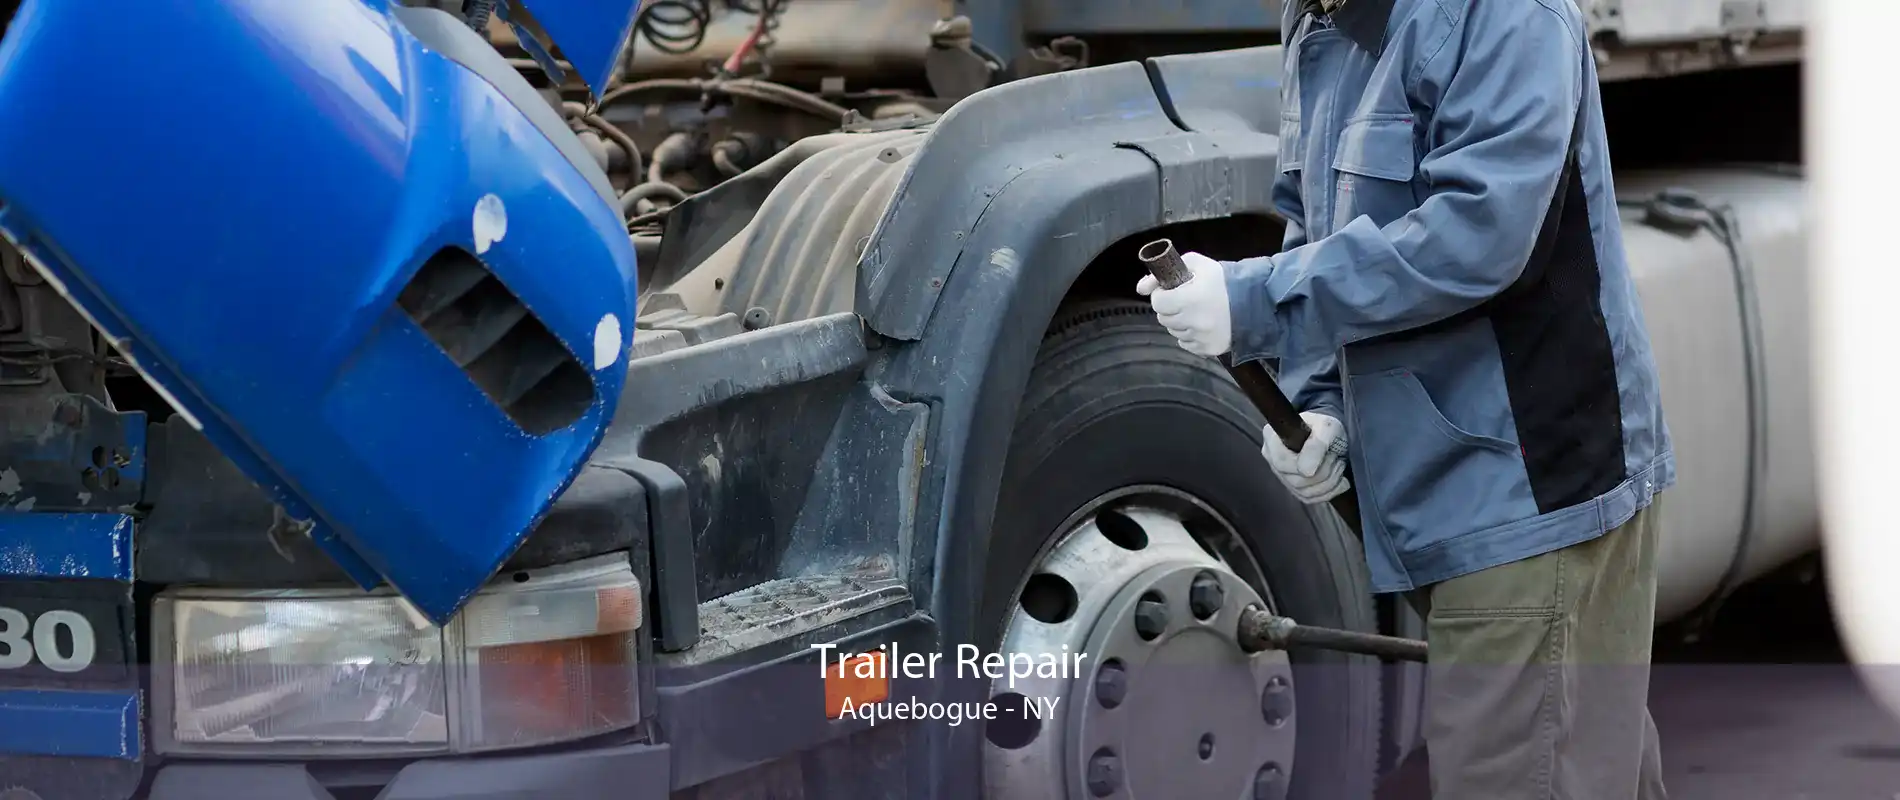 Trailer Repair Aquebogue - NY